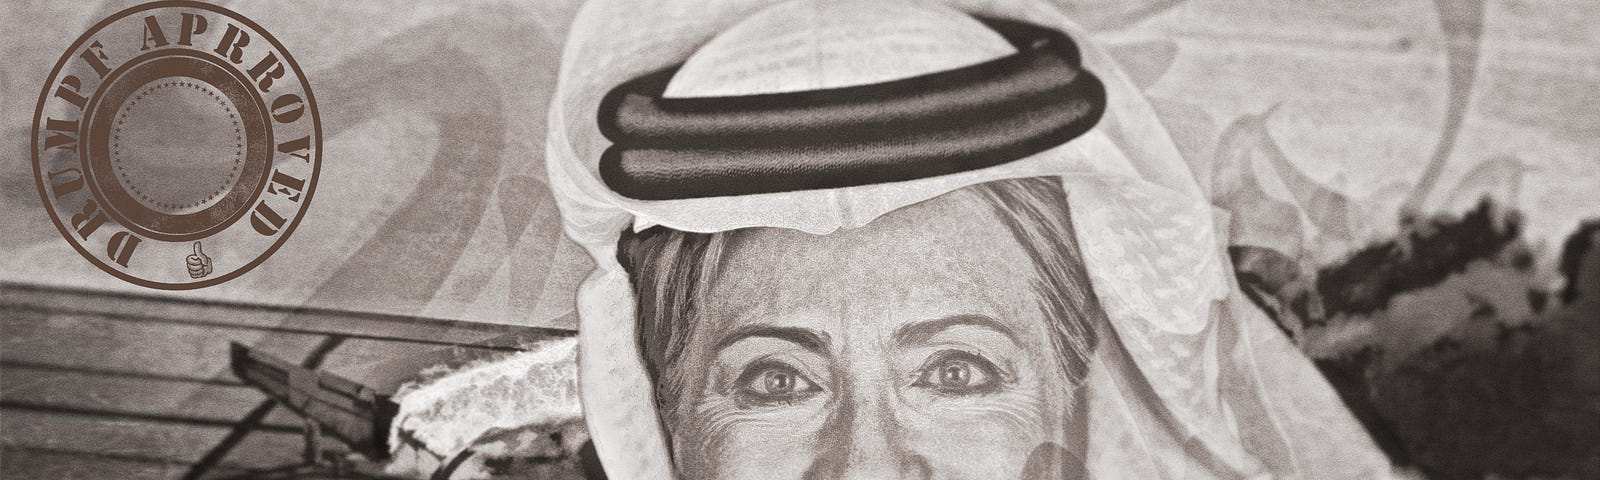 Hillary Clinton’s image superimposed over a plane crash.